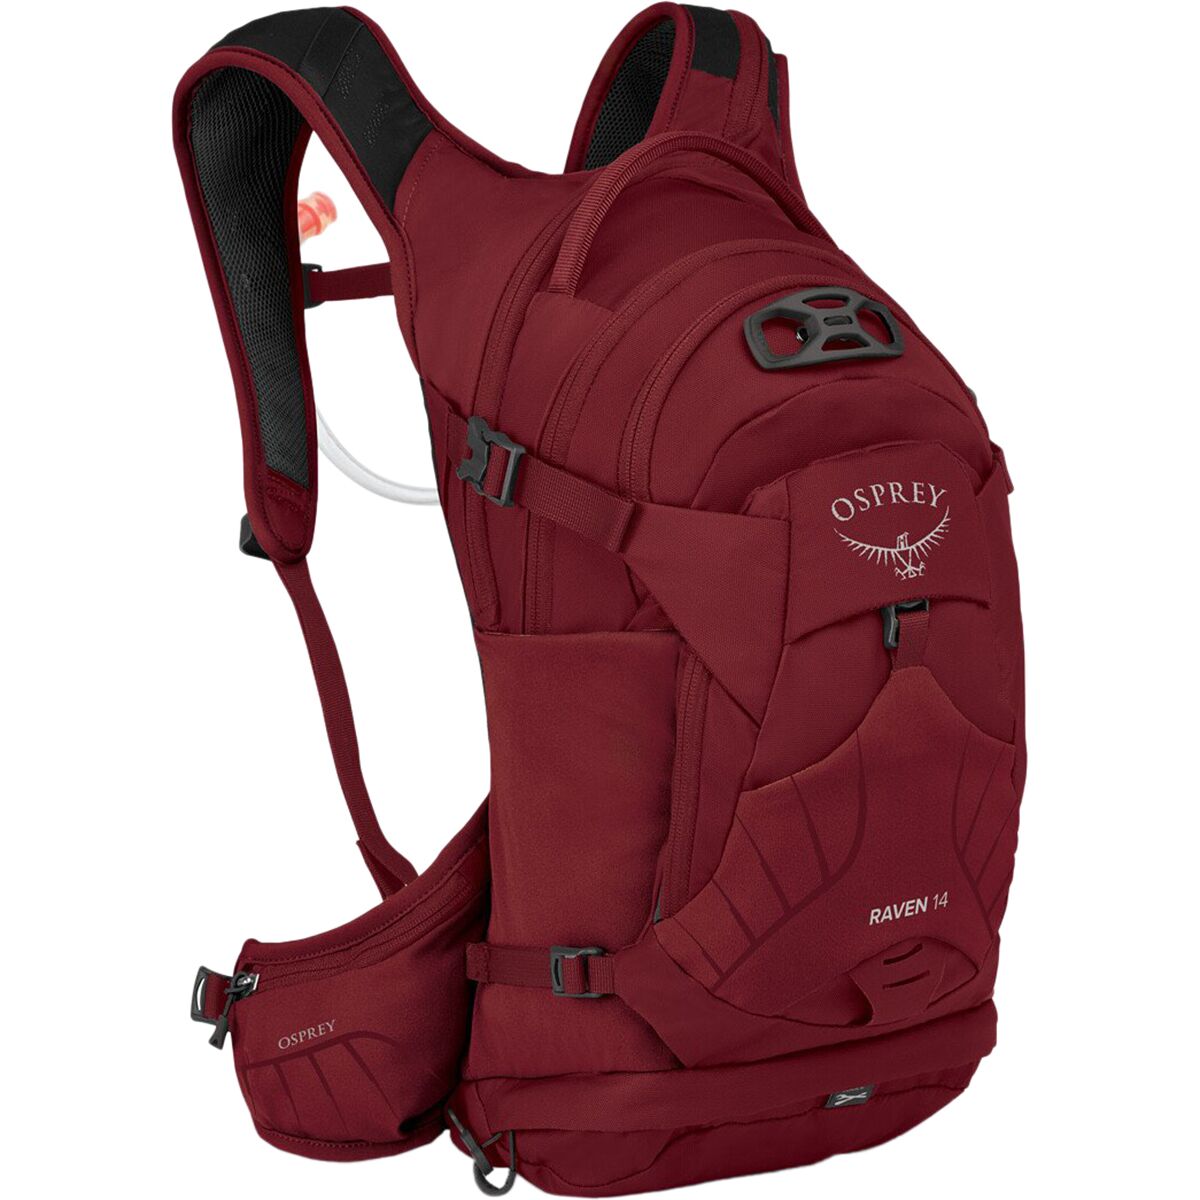 Osprey Packs Raven 14L Backpack - Women's Claret Red, One Size